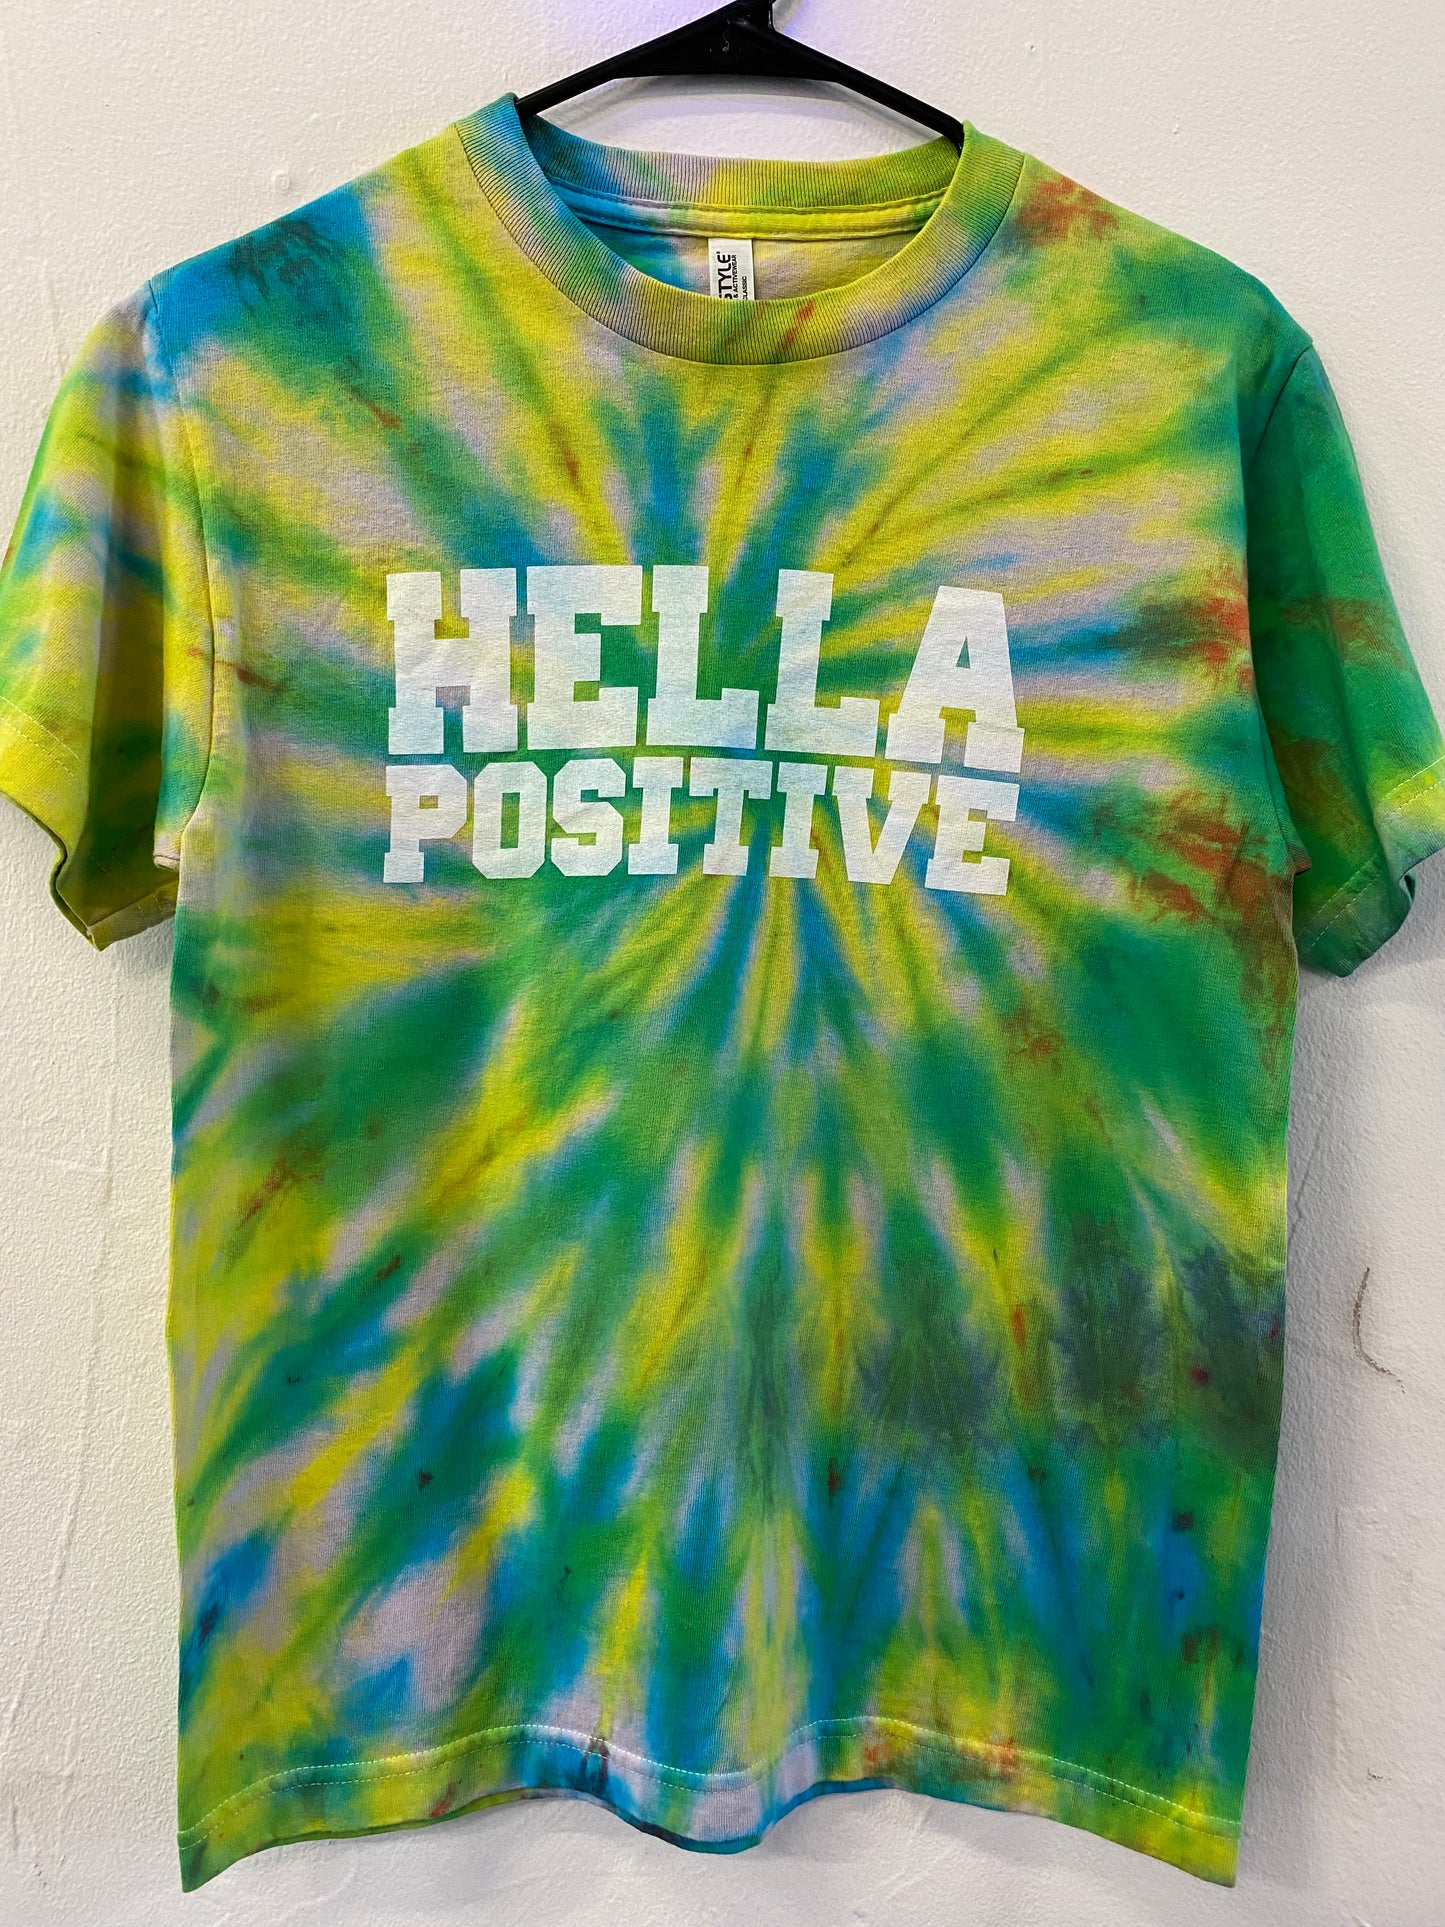 Hella Positive Tie Dye T shirt - Small